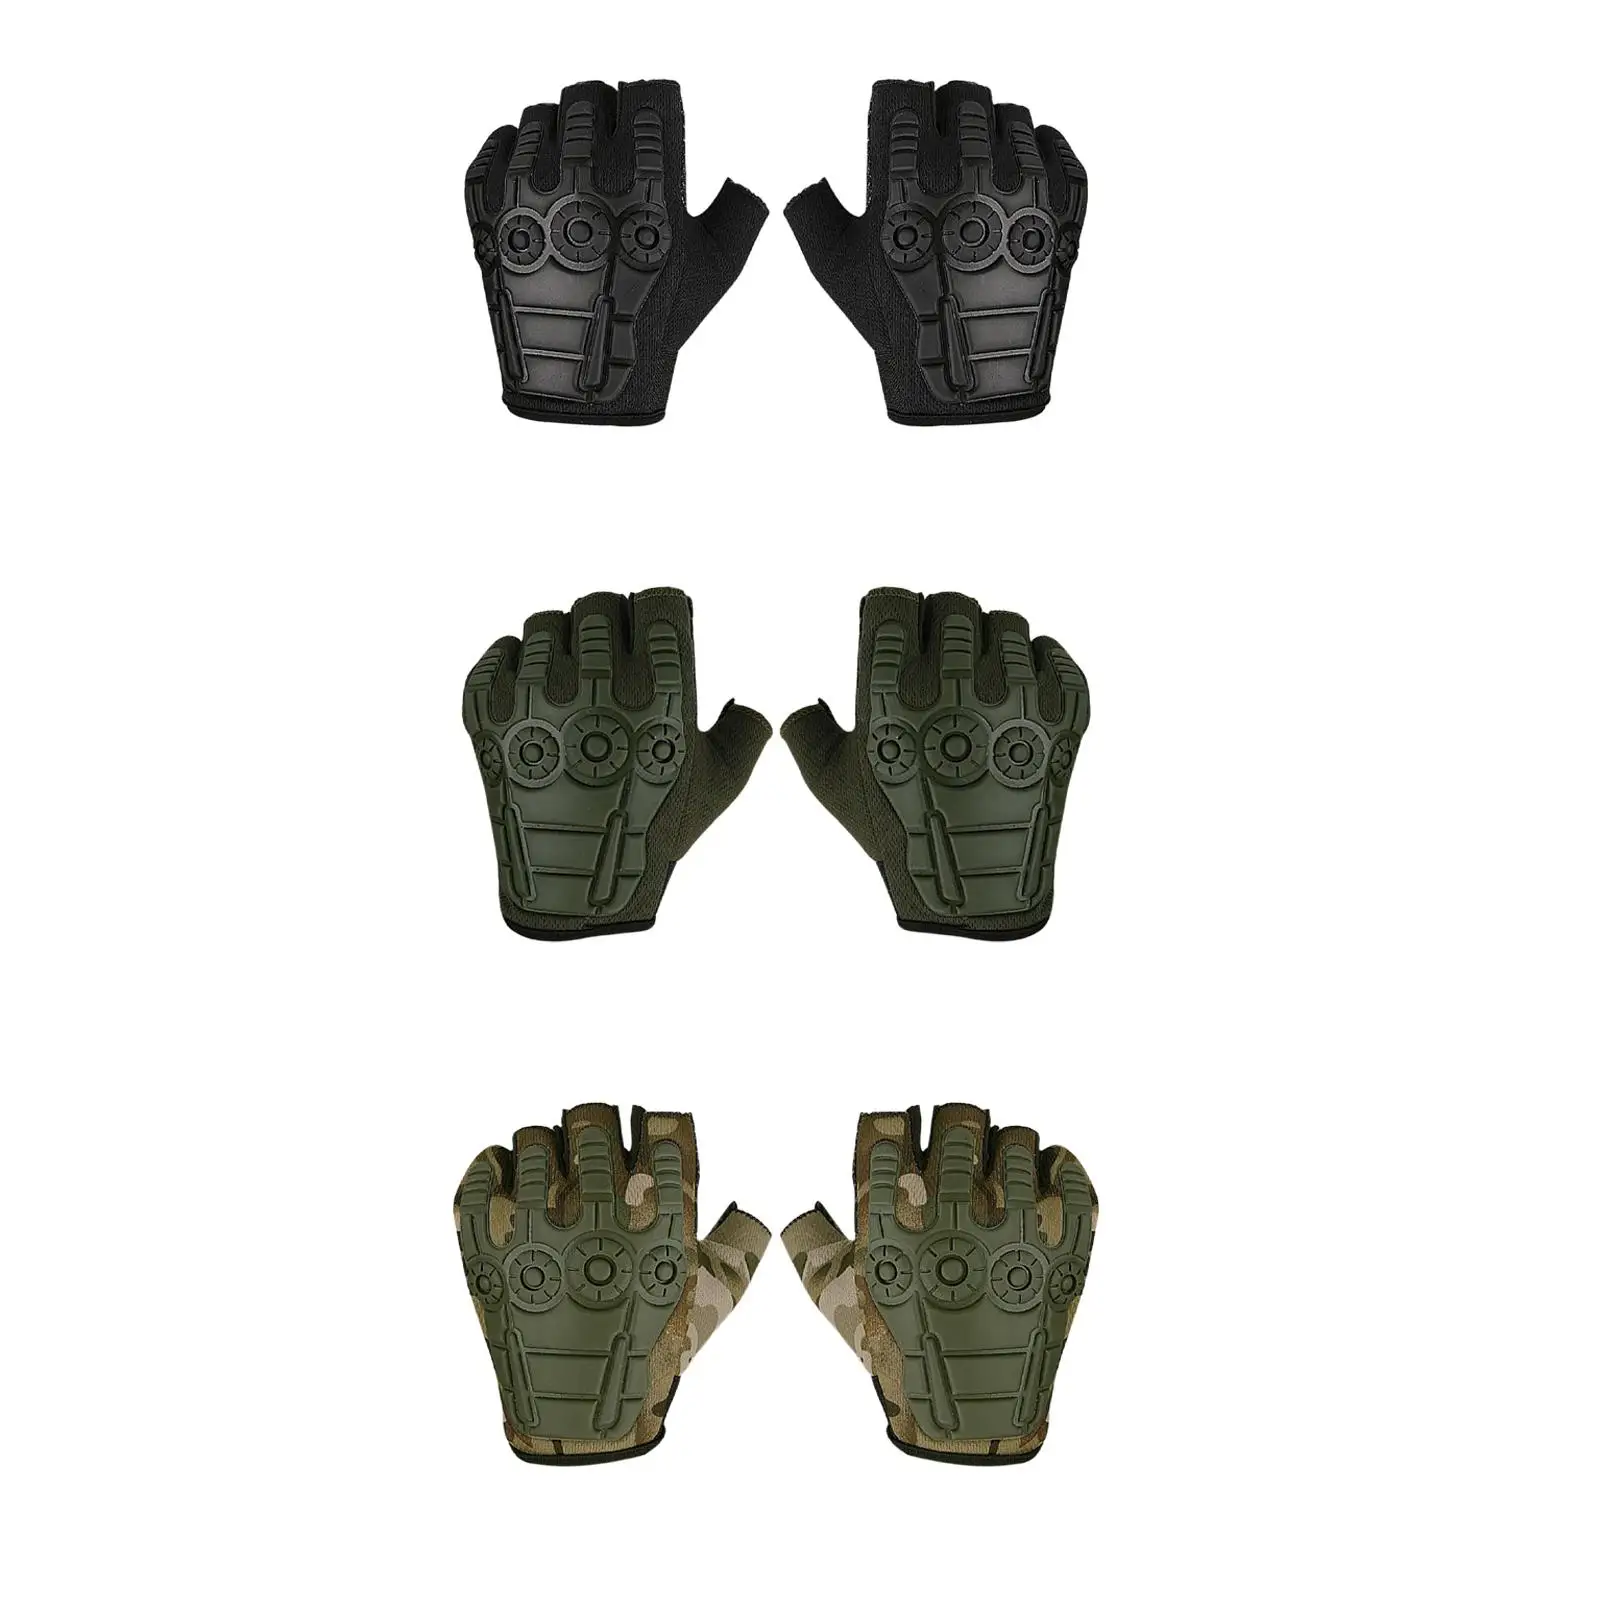 Outdoor Fingerless Gloves Anti Slip Cycling Gloves Mittens Half Finger Gloves for Adults Unisex Men Women Riding Running Driving